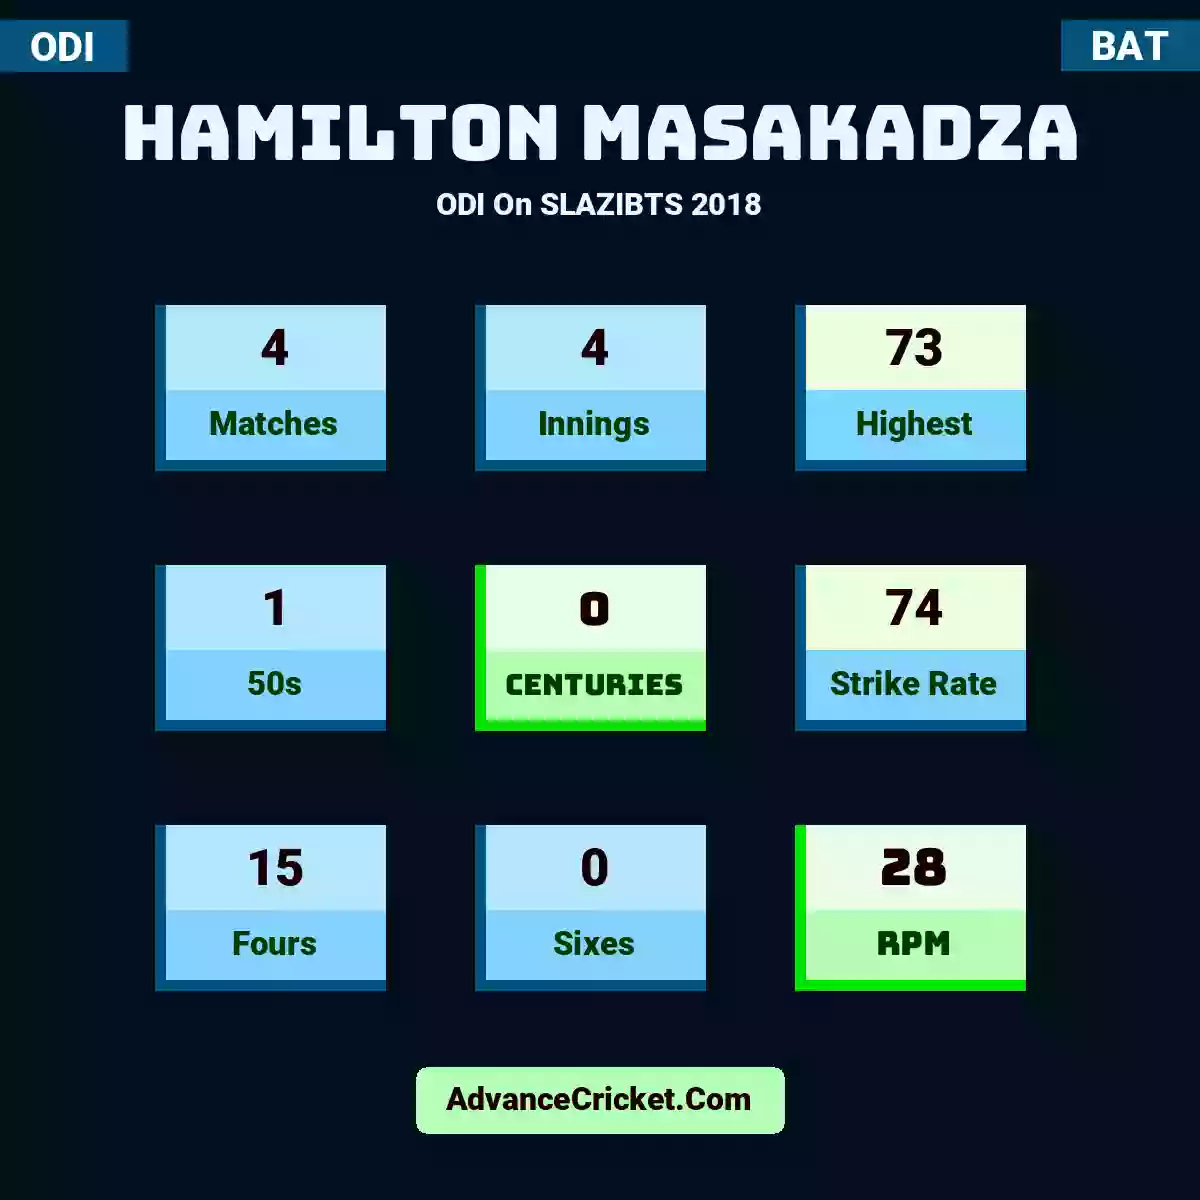 Hamilton Masakadza ODI  On SLAZIBTS 2018, Hamilton Masakadza played 4 matches, scored 73 runs as highest, 1 half-centuries, and 0 centuries, with a strike rate of 74. H.Masakadza hit 15 fours and 0 sixes, with an RPM of 28.